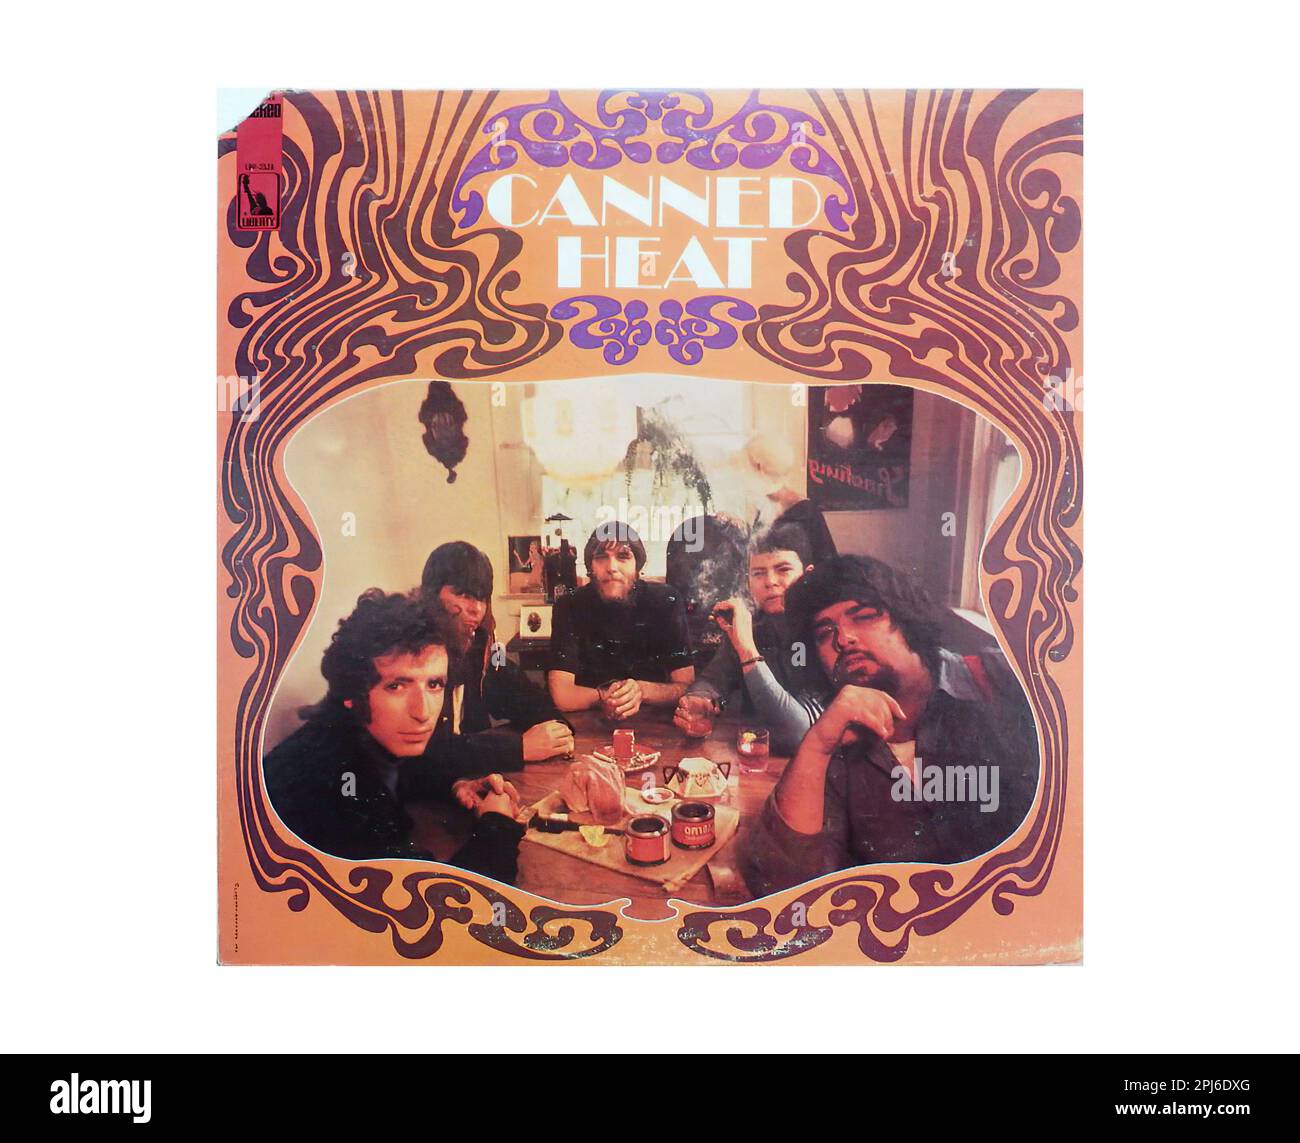 Canned Heat 1967 - Vintage U.S. Music Vinyl Record Stock Photo - Alamy